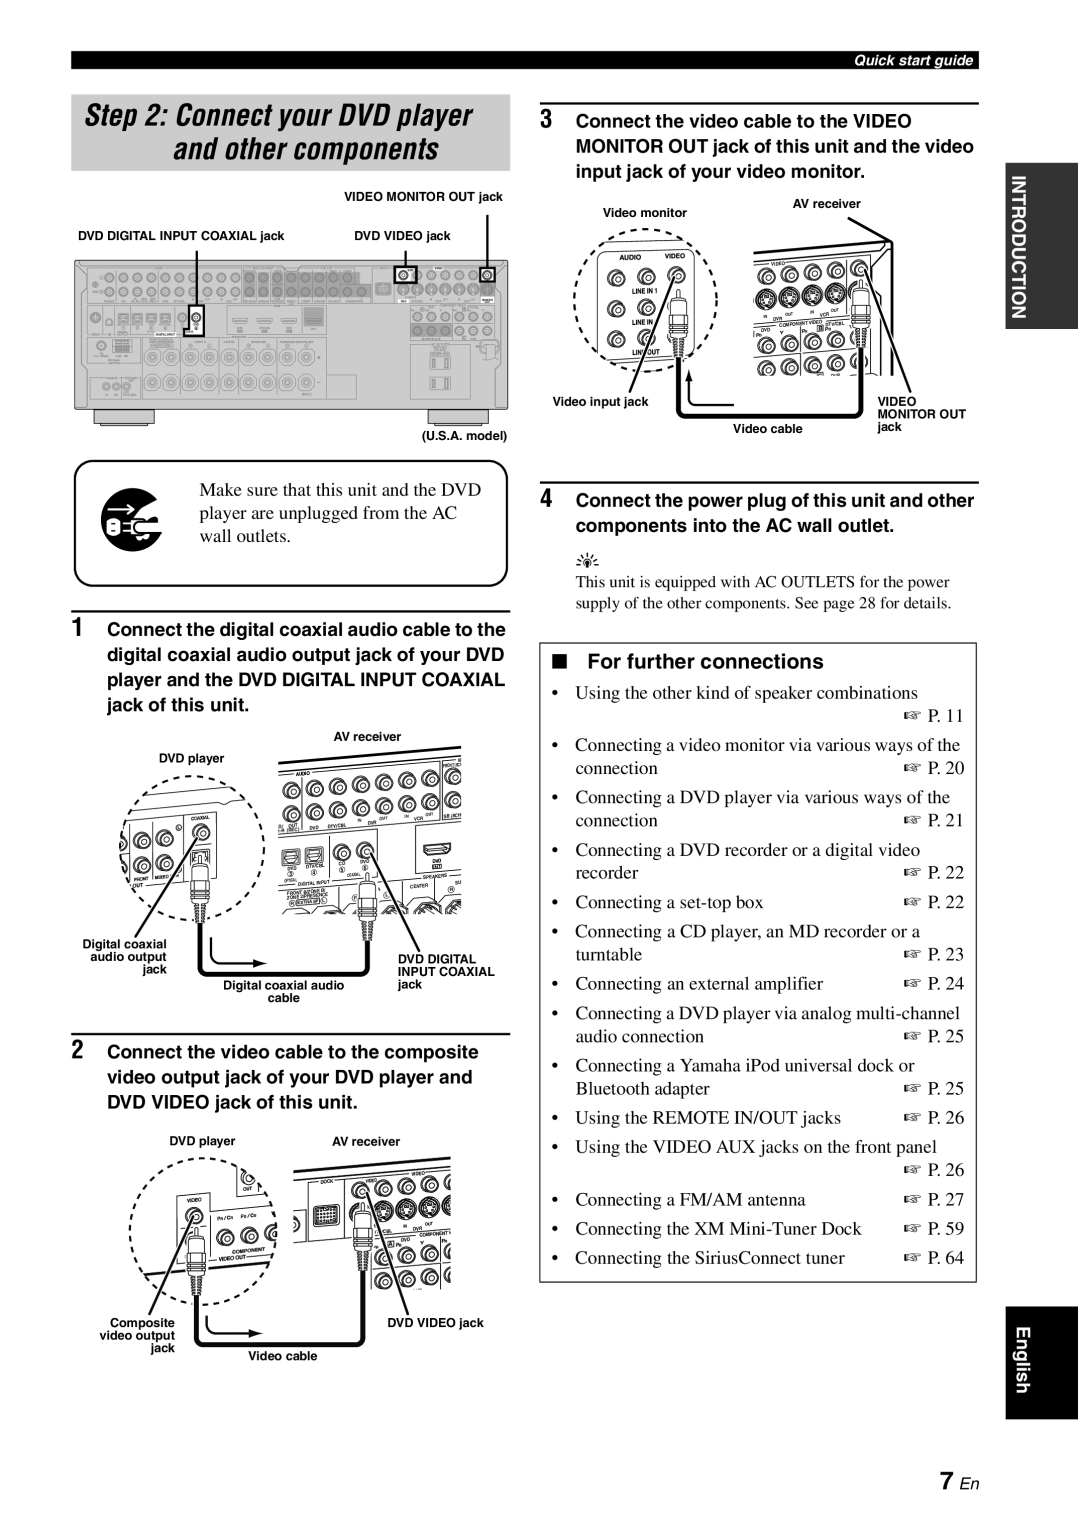 Yamaha HTR-6180 owner manual 7 En, For further connections 